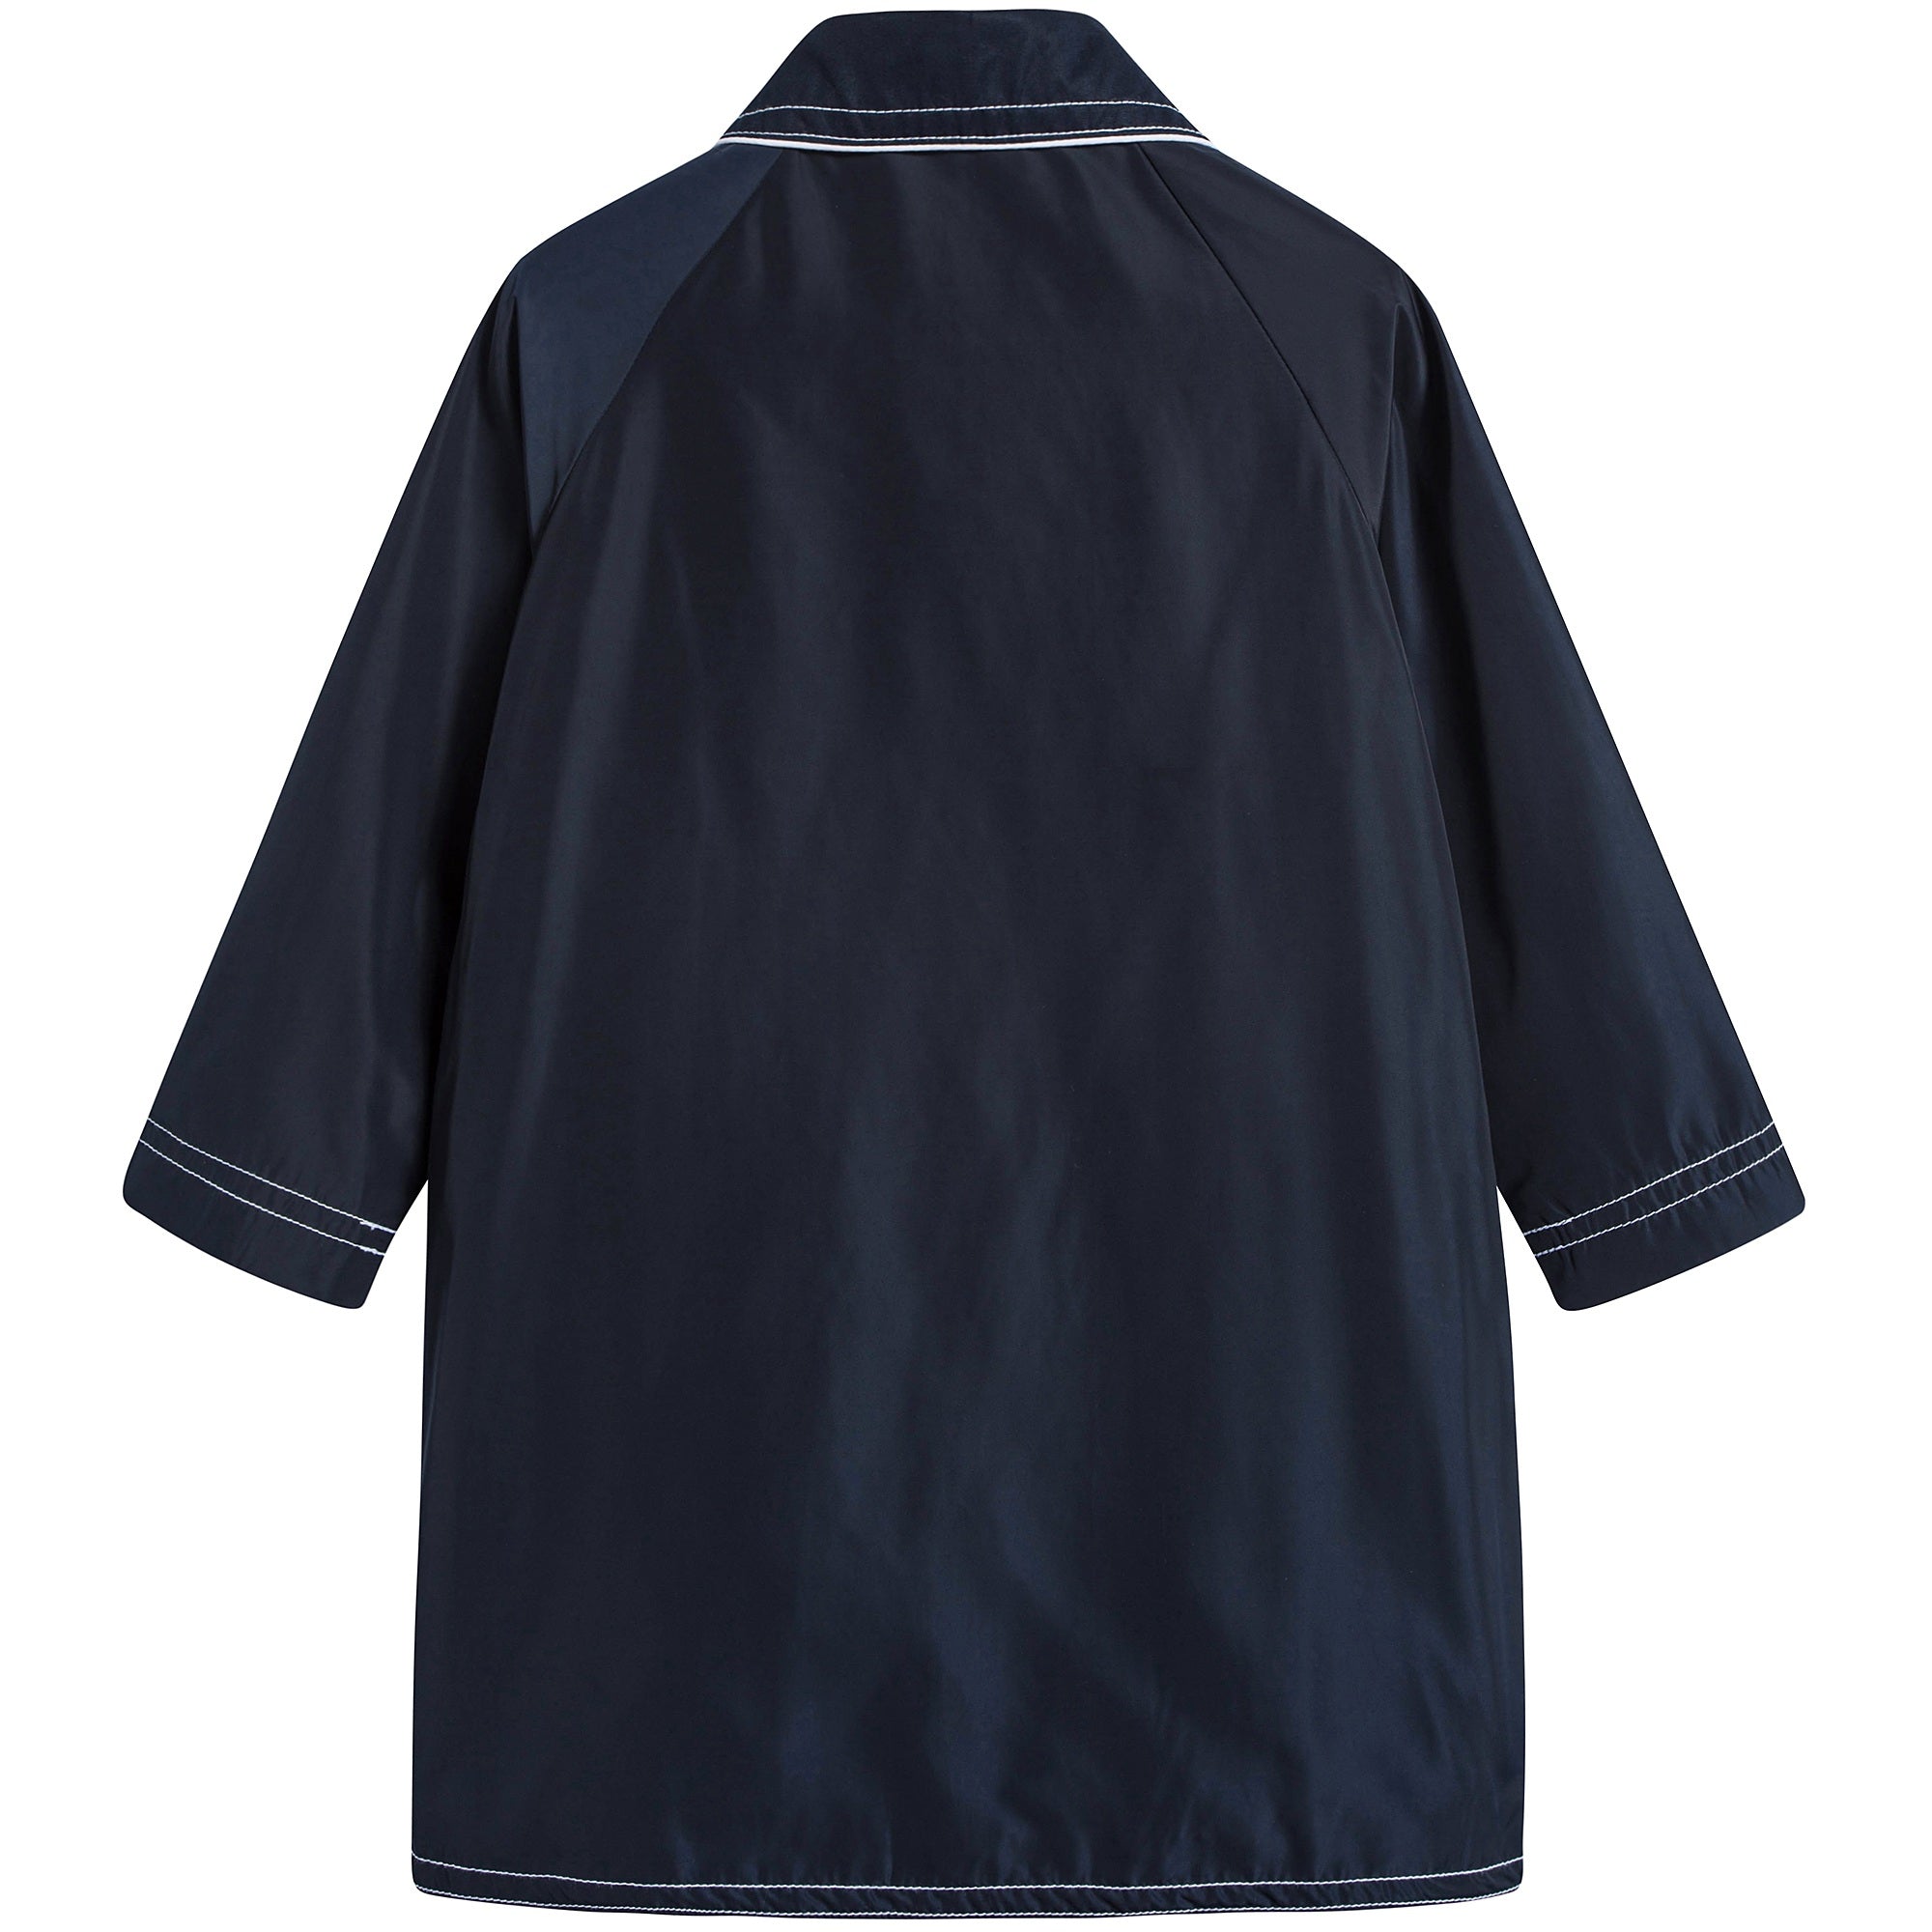 Girls Navy Blue Polyester & Cotton Jacket